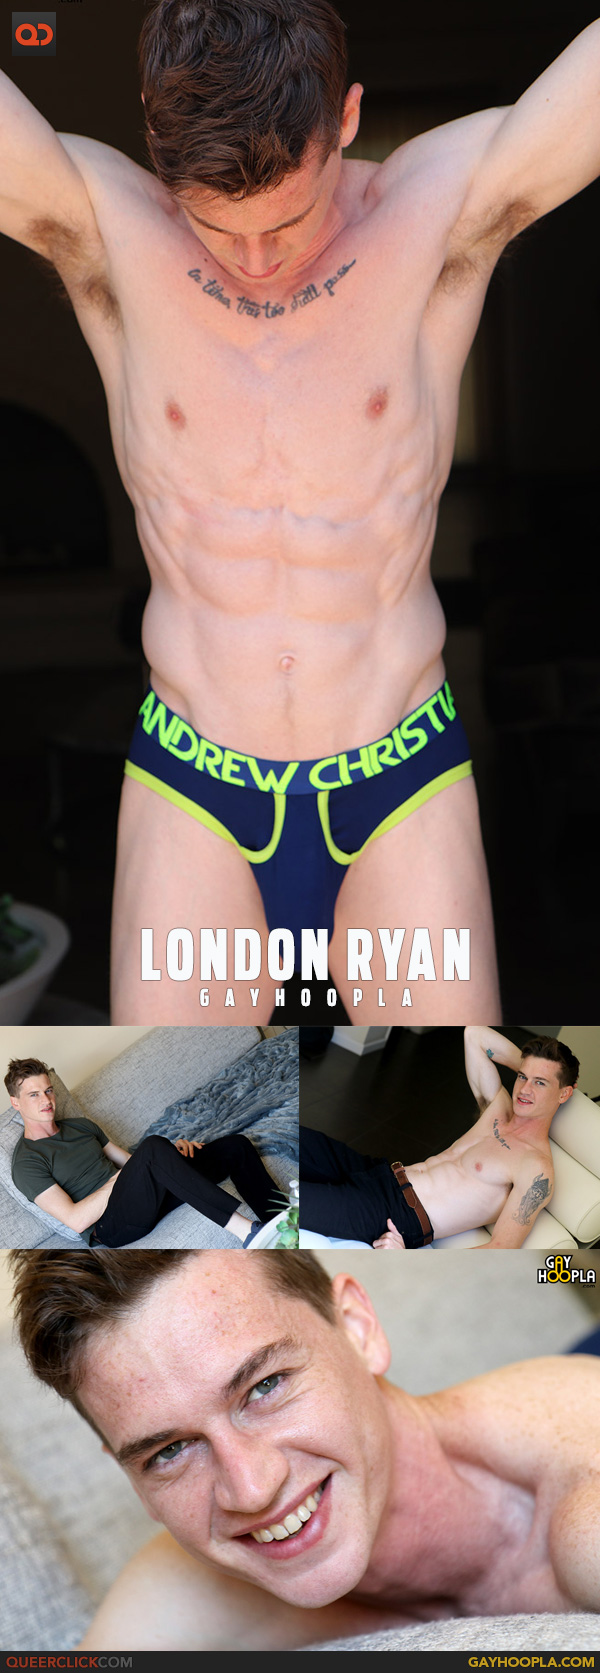 Gayhoopla: London Ryan